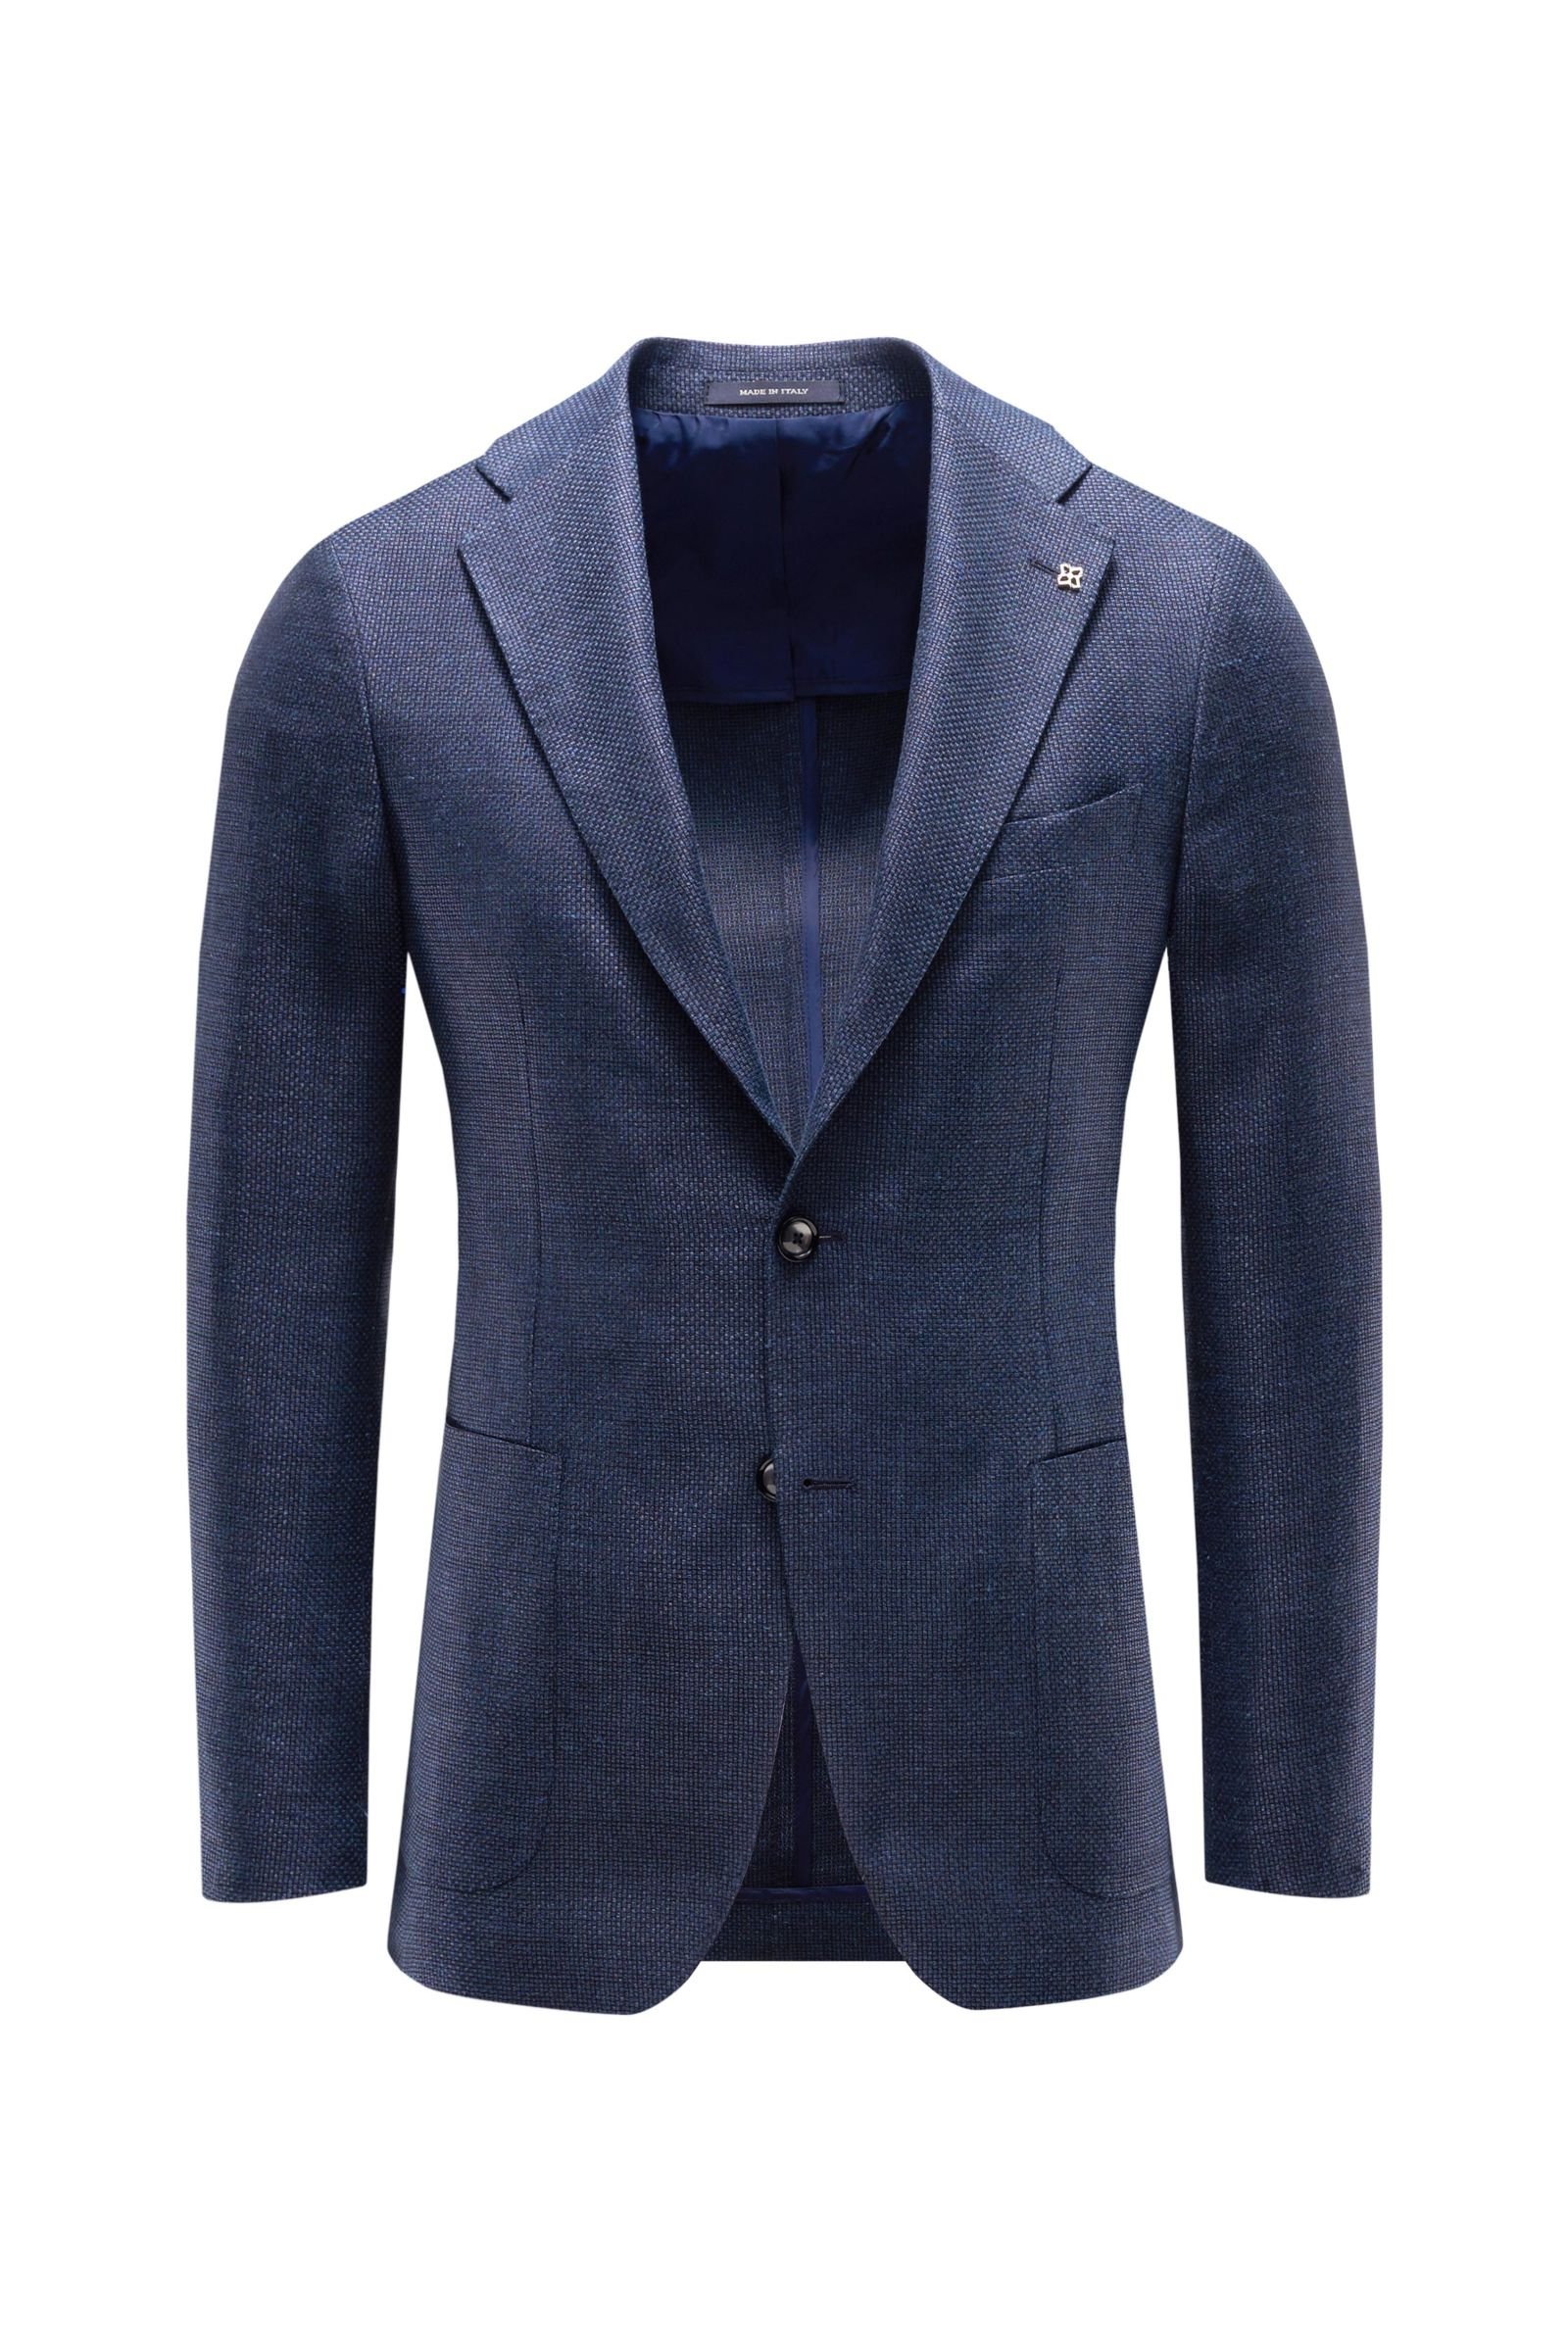 Smart-casual jacket grey-blue